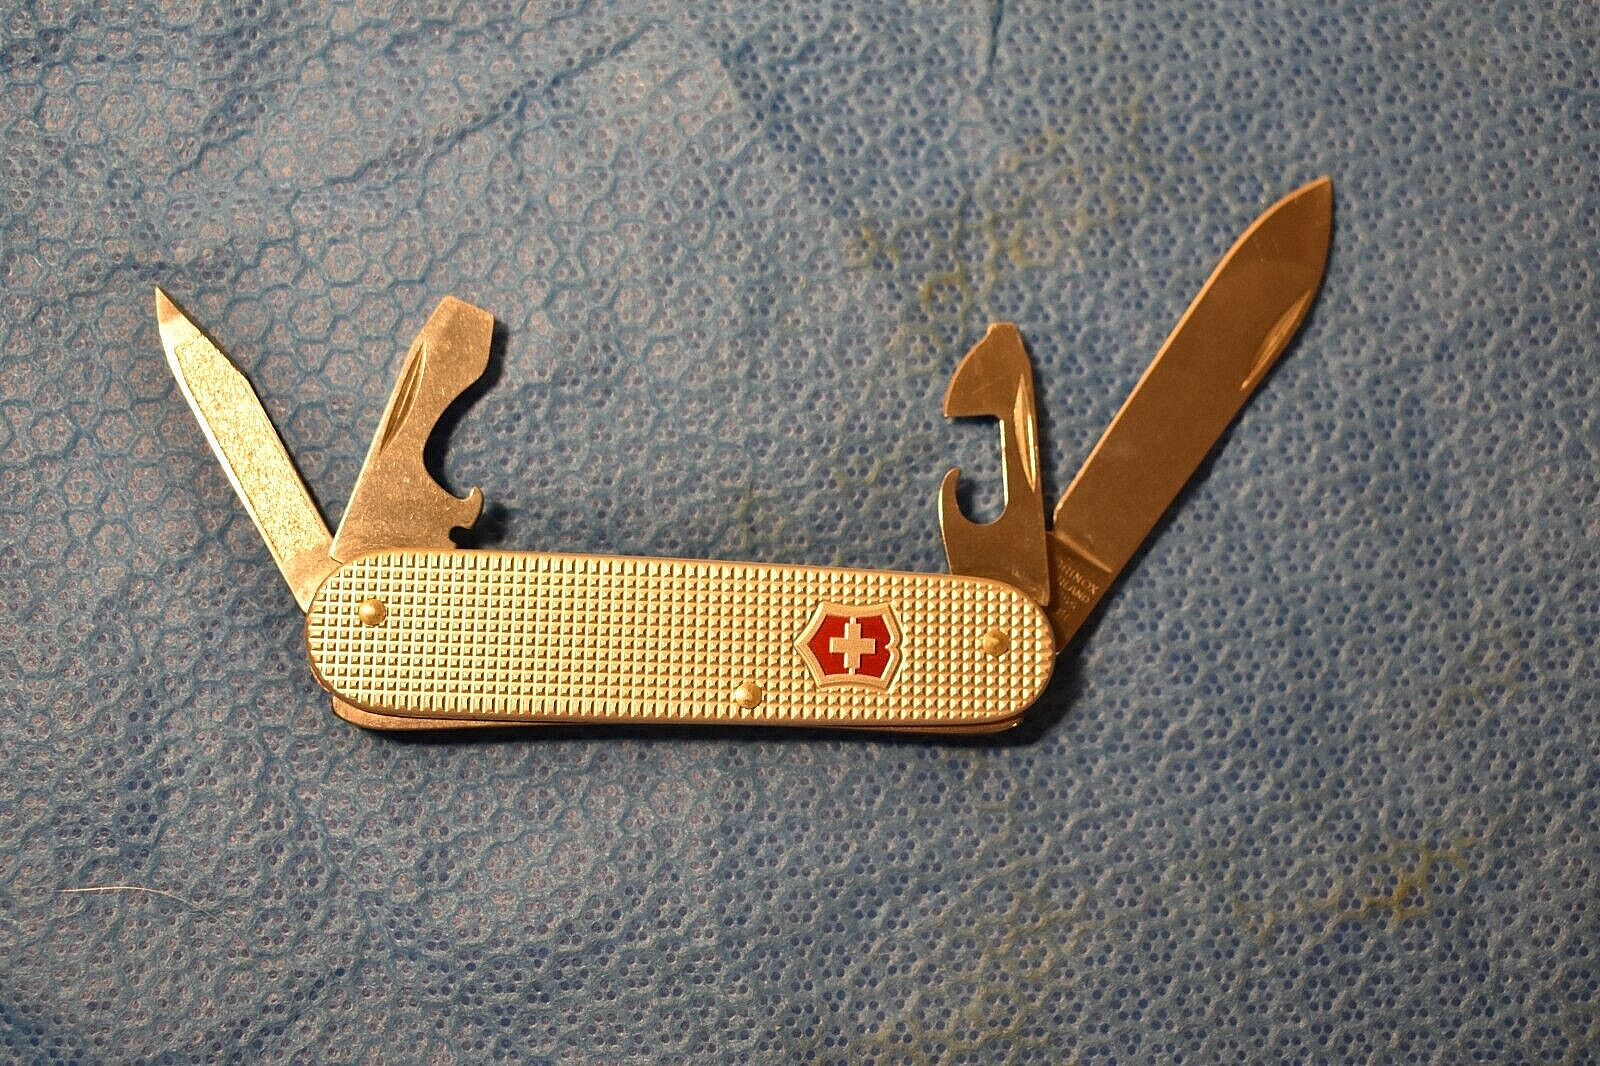 Victorinox Cadet Alox Silver Pocket Knife Silver Swiss Army Blade Survival EDC